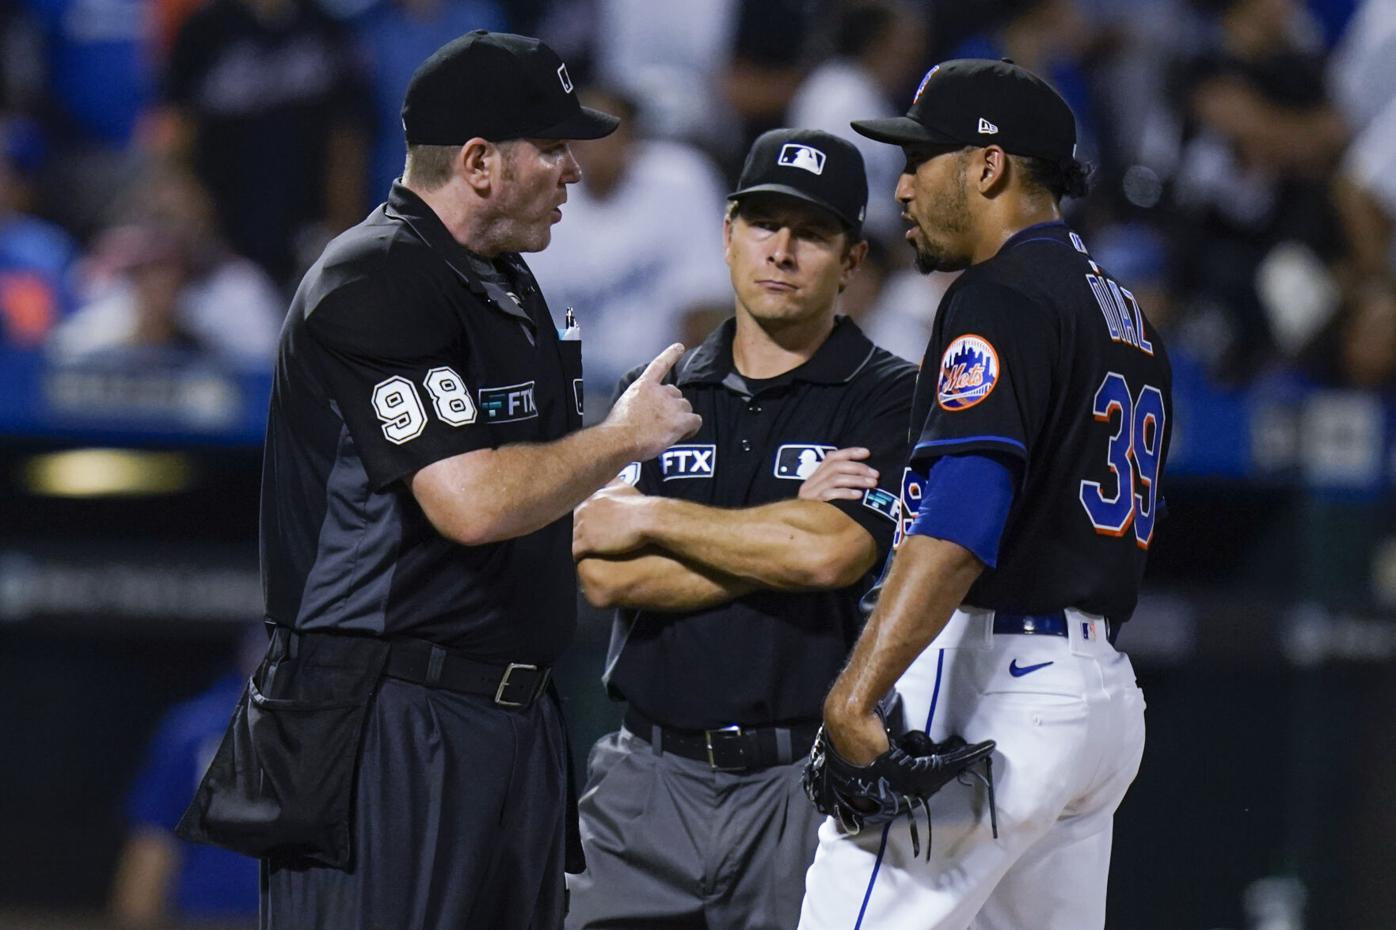 ftx on major league umpires uniform